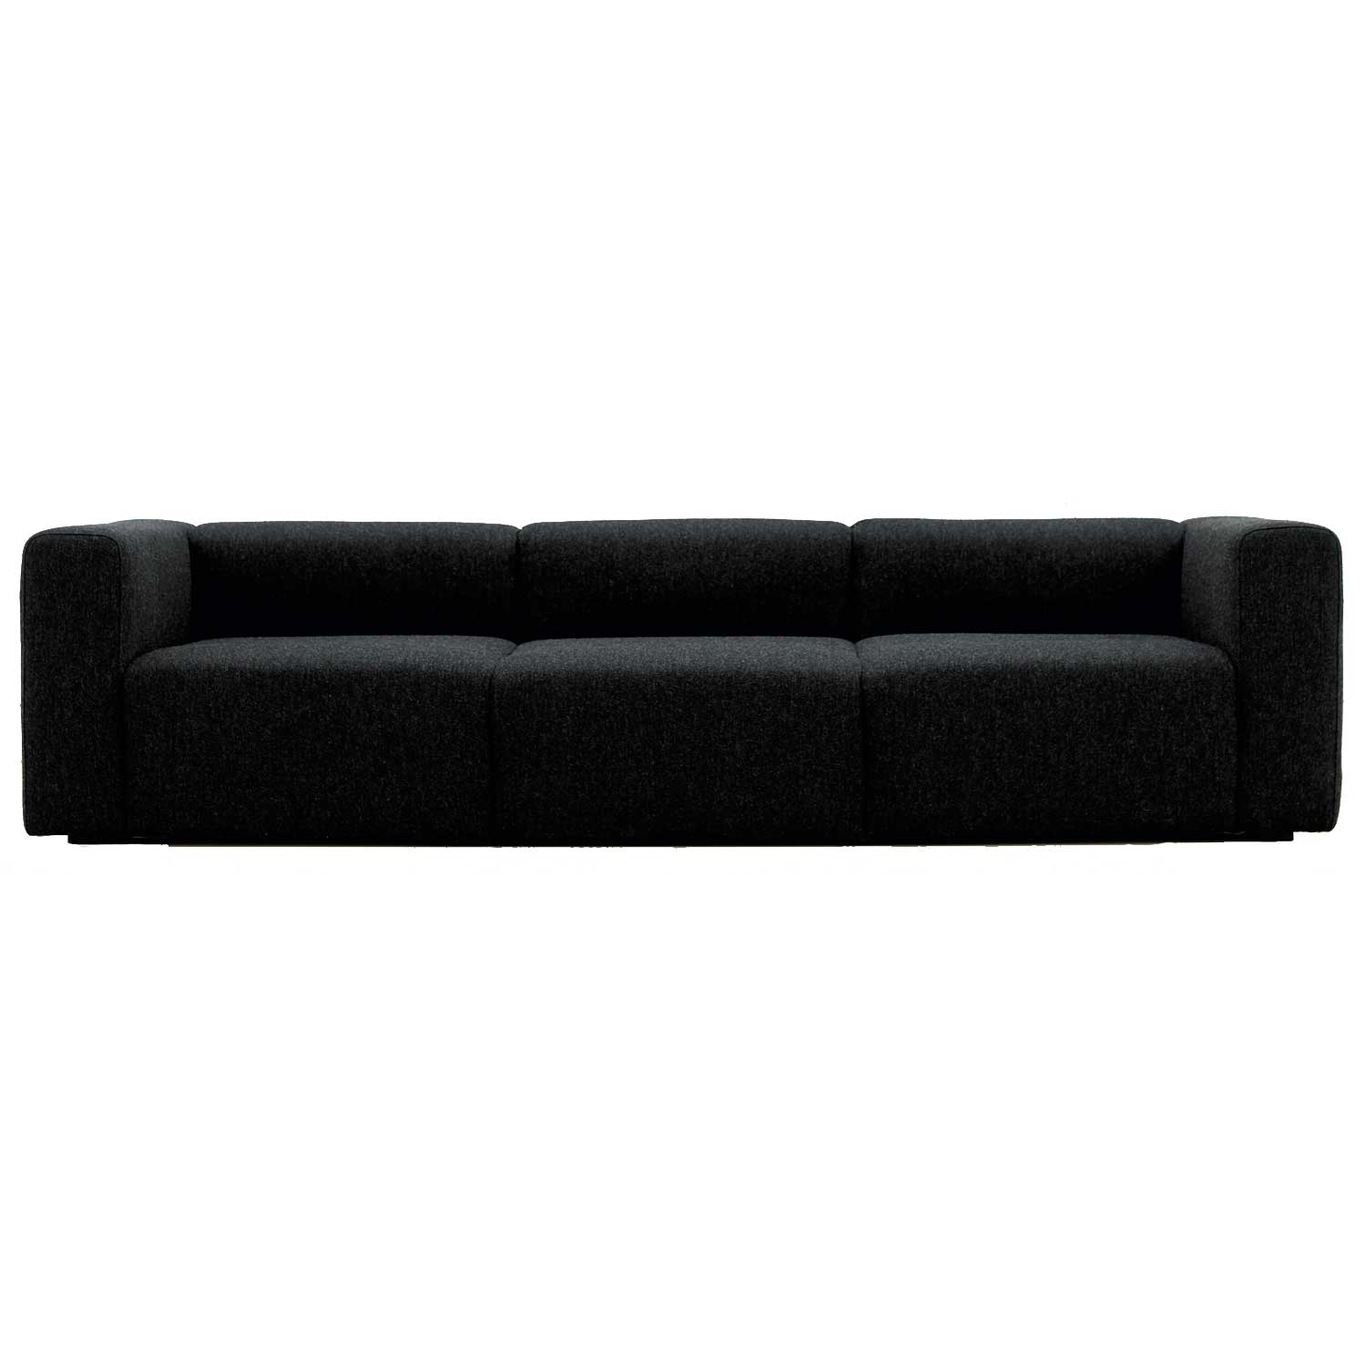 Mags 3 Seater Sofa, light grey